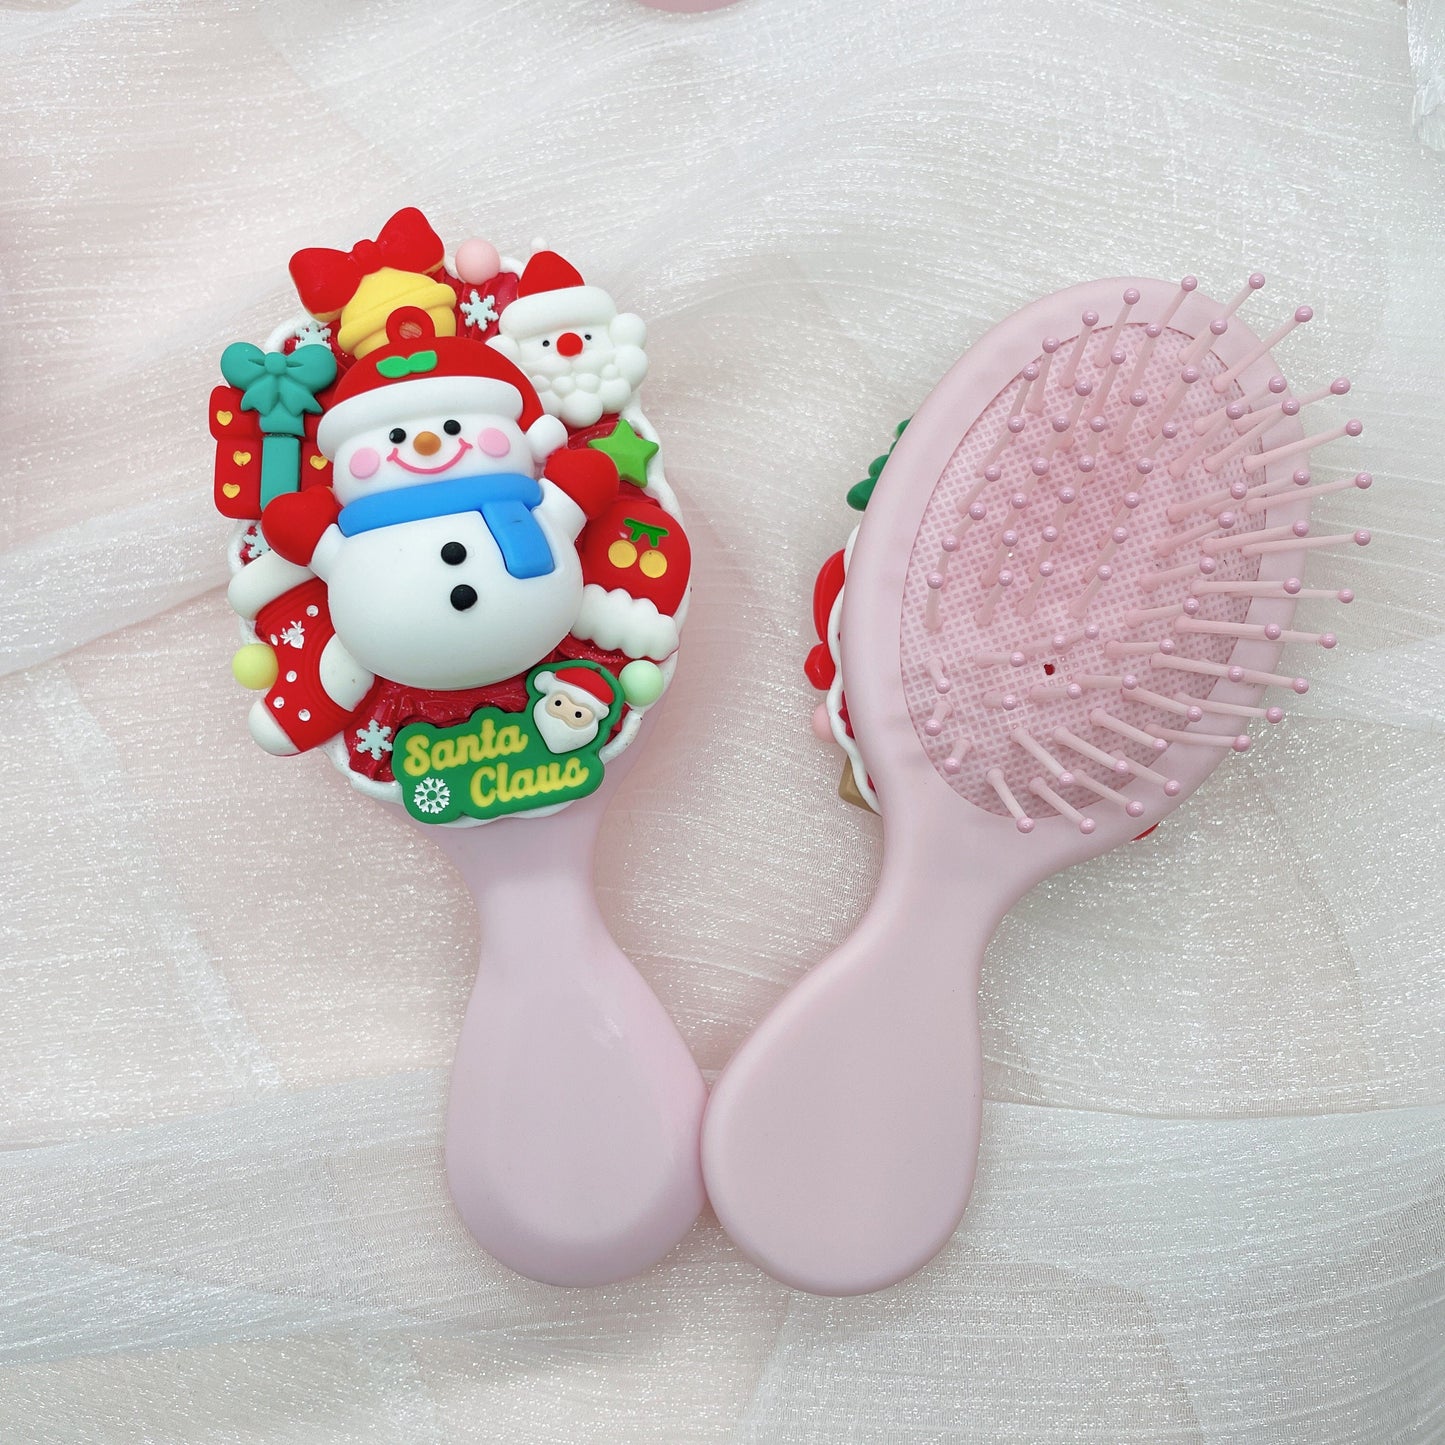 Kawaii Christmas hair brush, Handmade Decoden Hair Brushes, Random 1, each one is unique